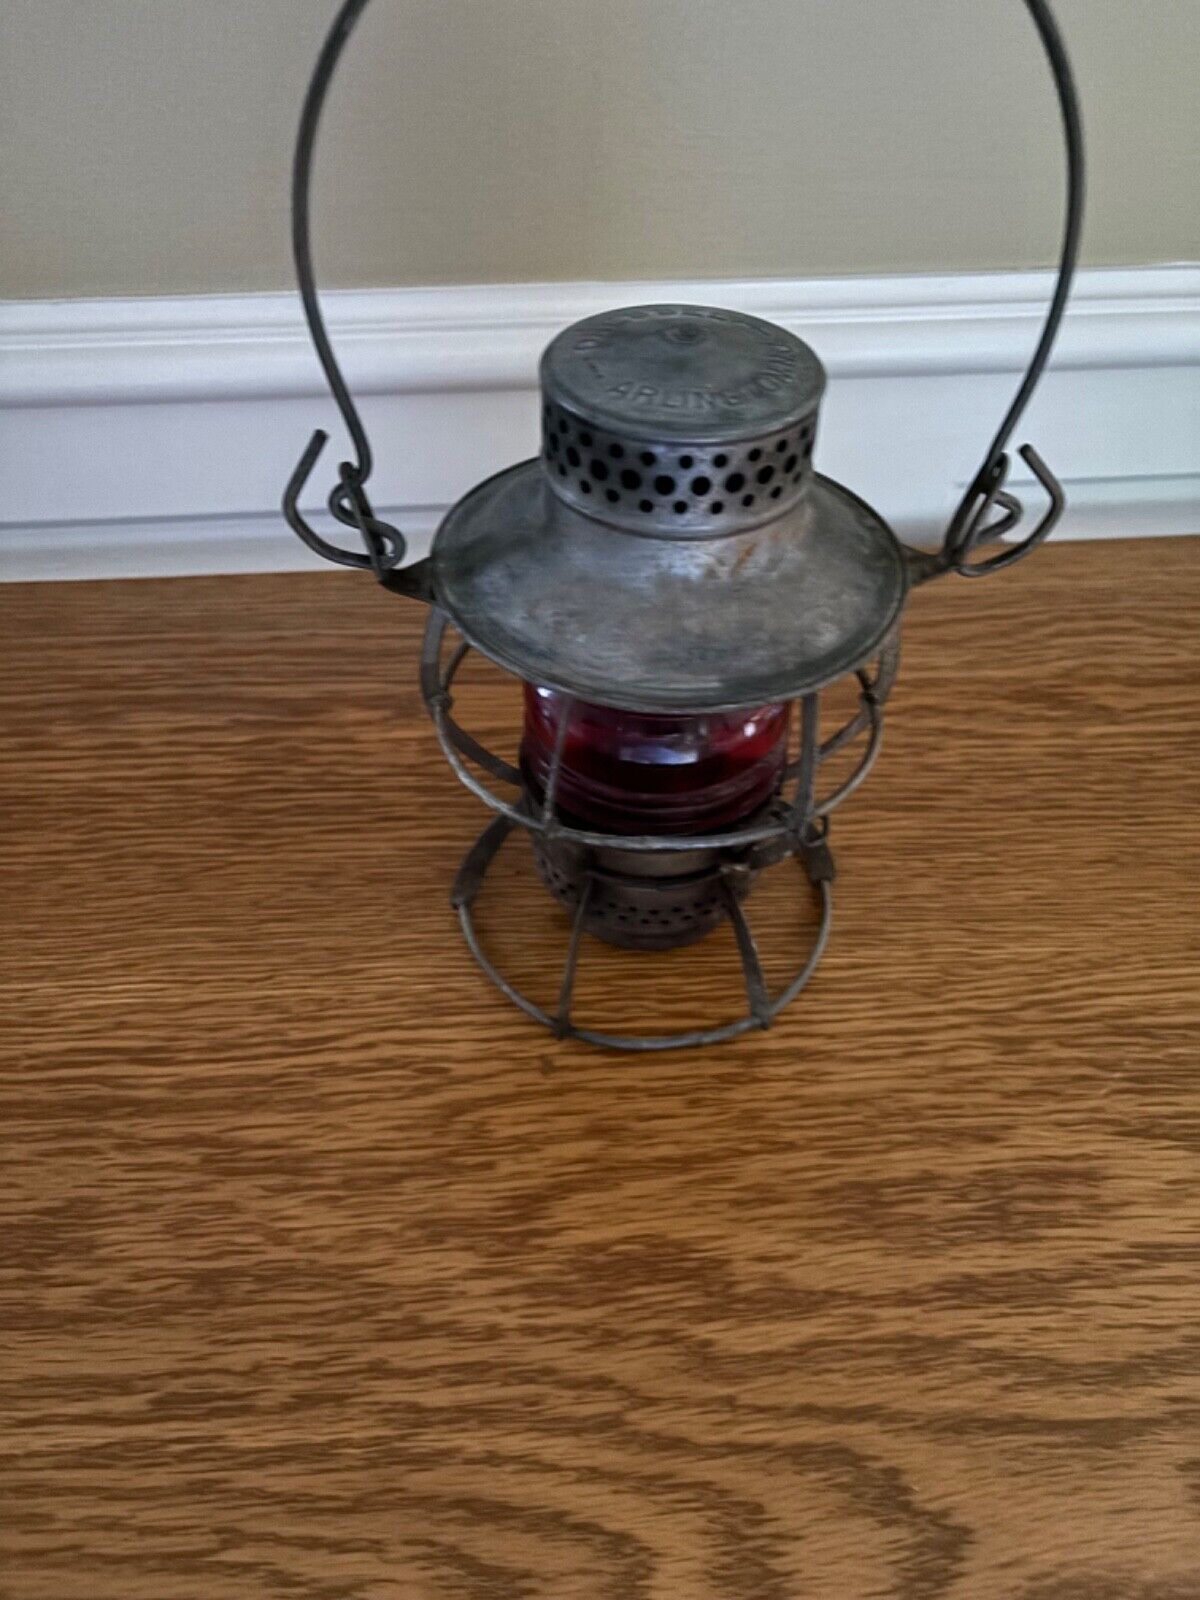 Vintage DRESSEL ARLINGTON Louisville and Nashville Railroad Lantern & Red Globe